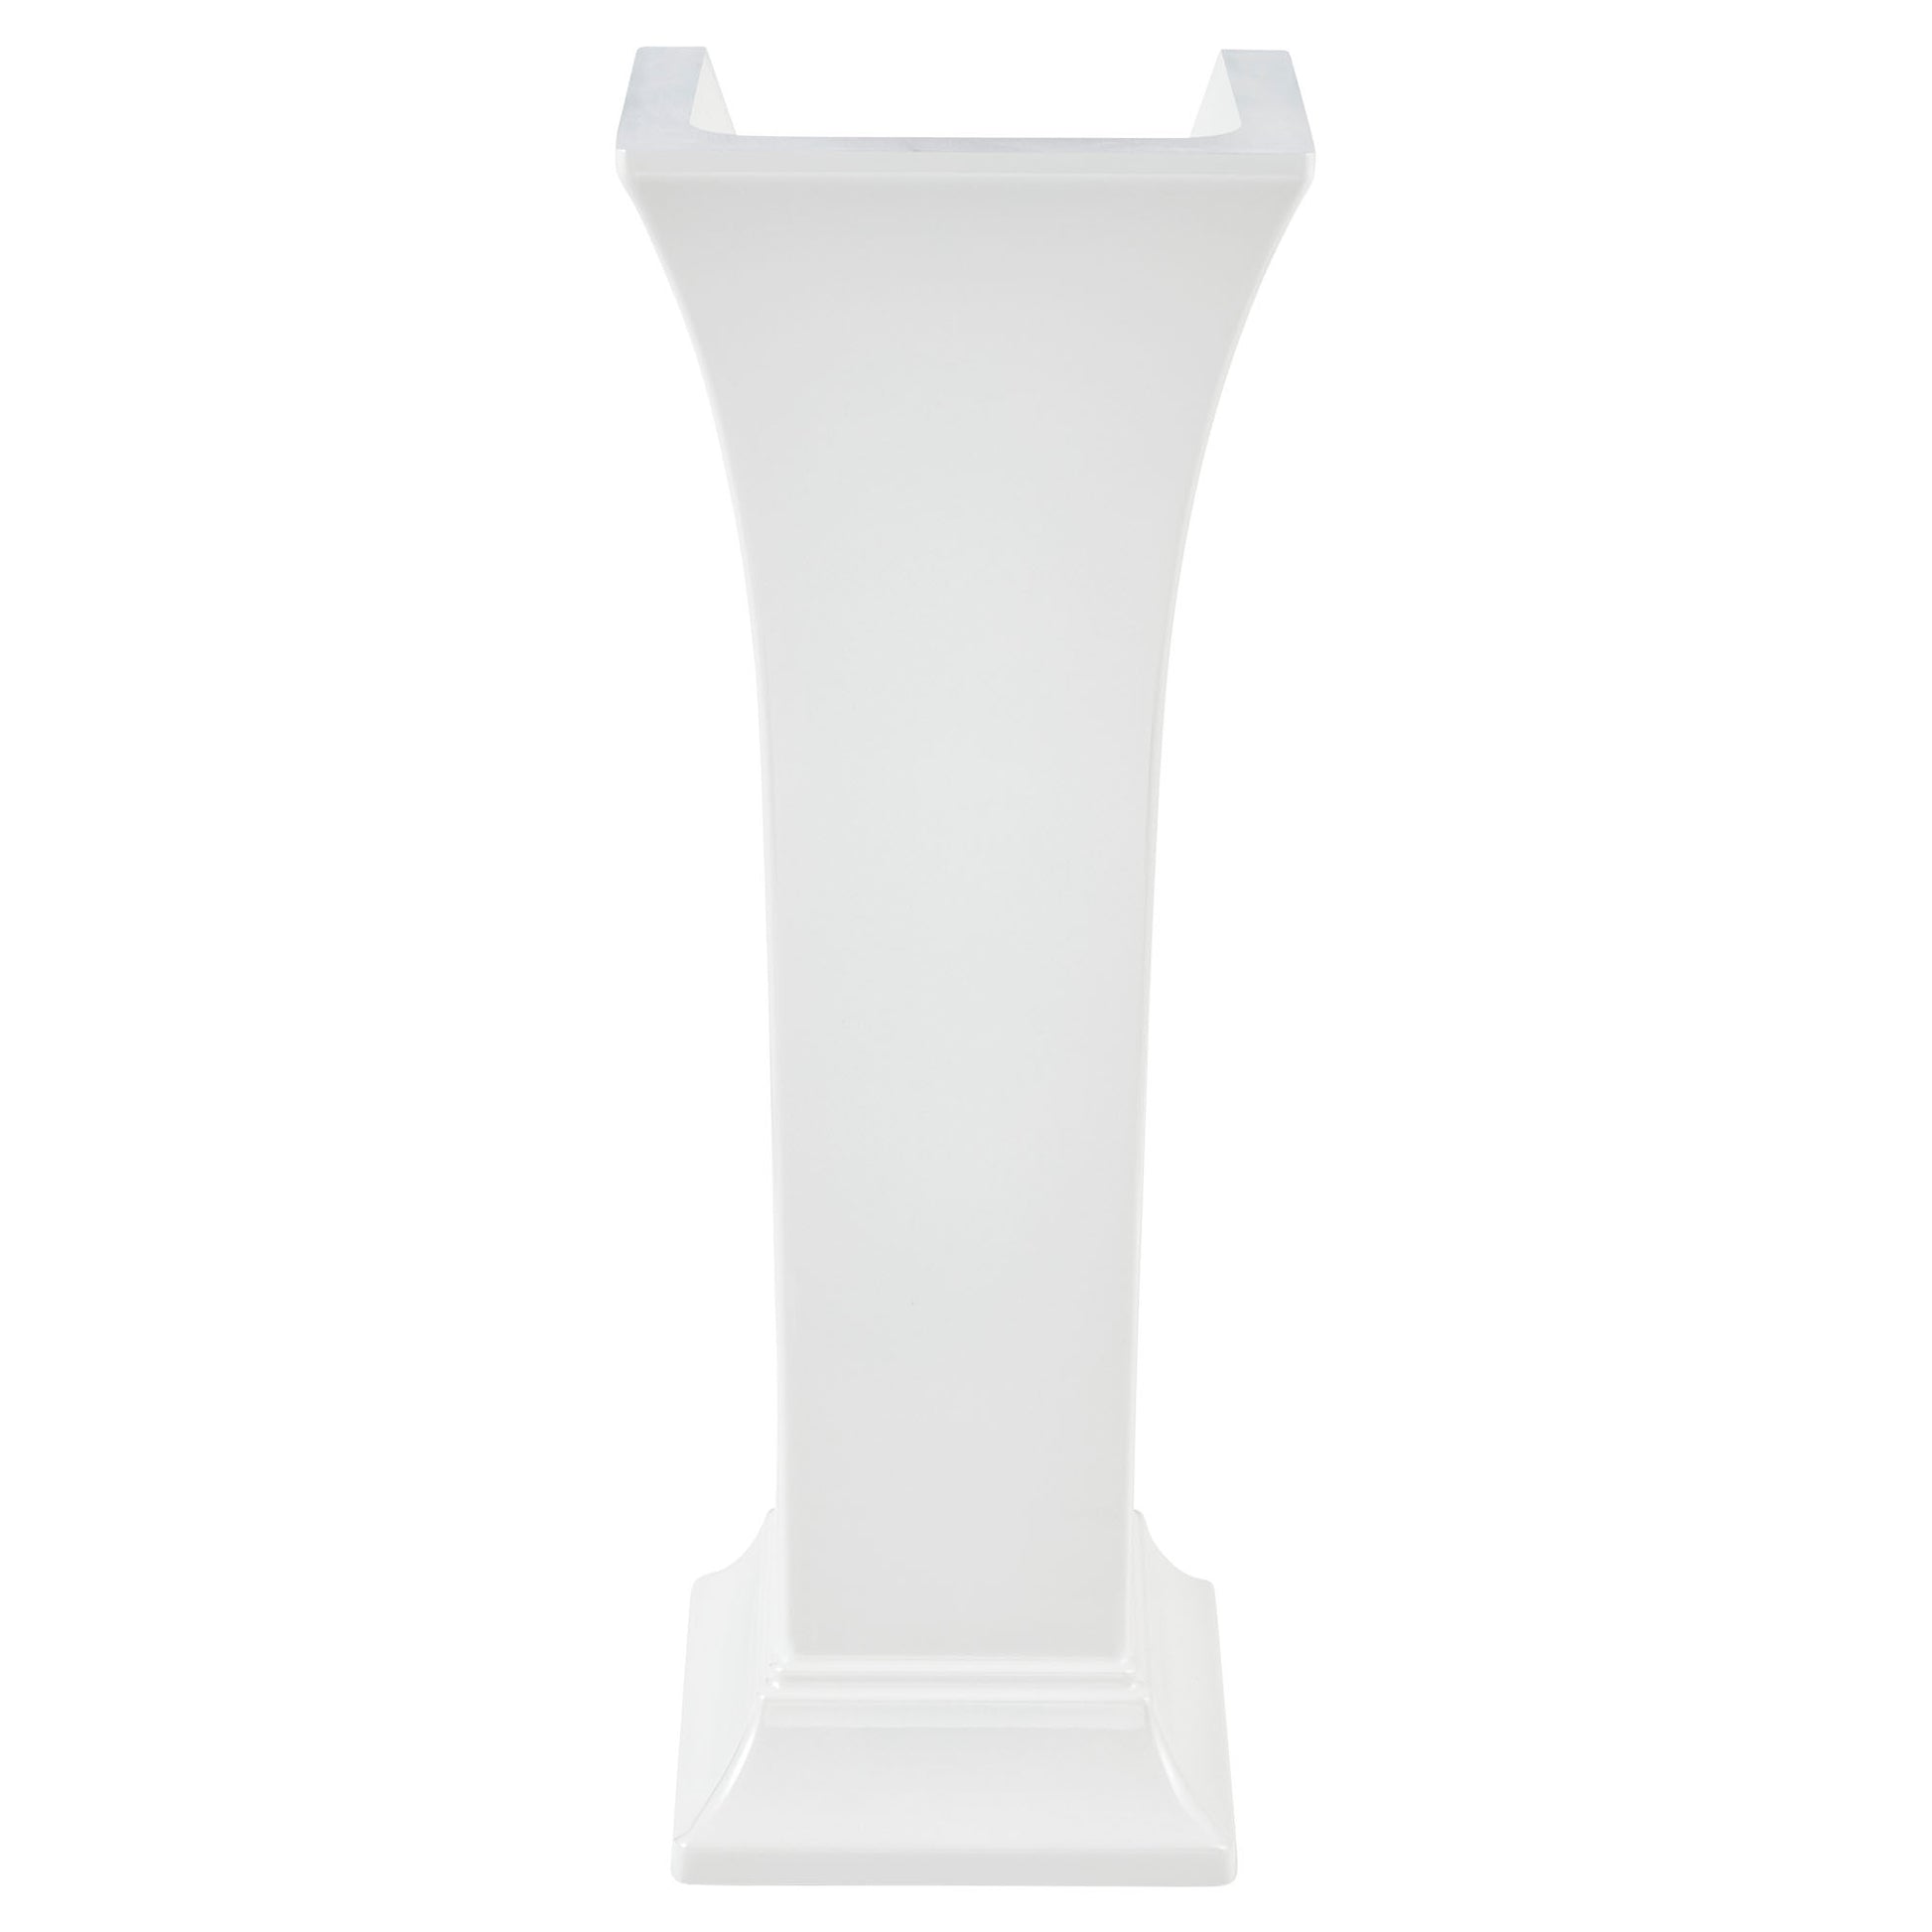 AMERICAN-STANDARD 0056001.020, Town Square S Pedestal Leg in White